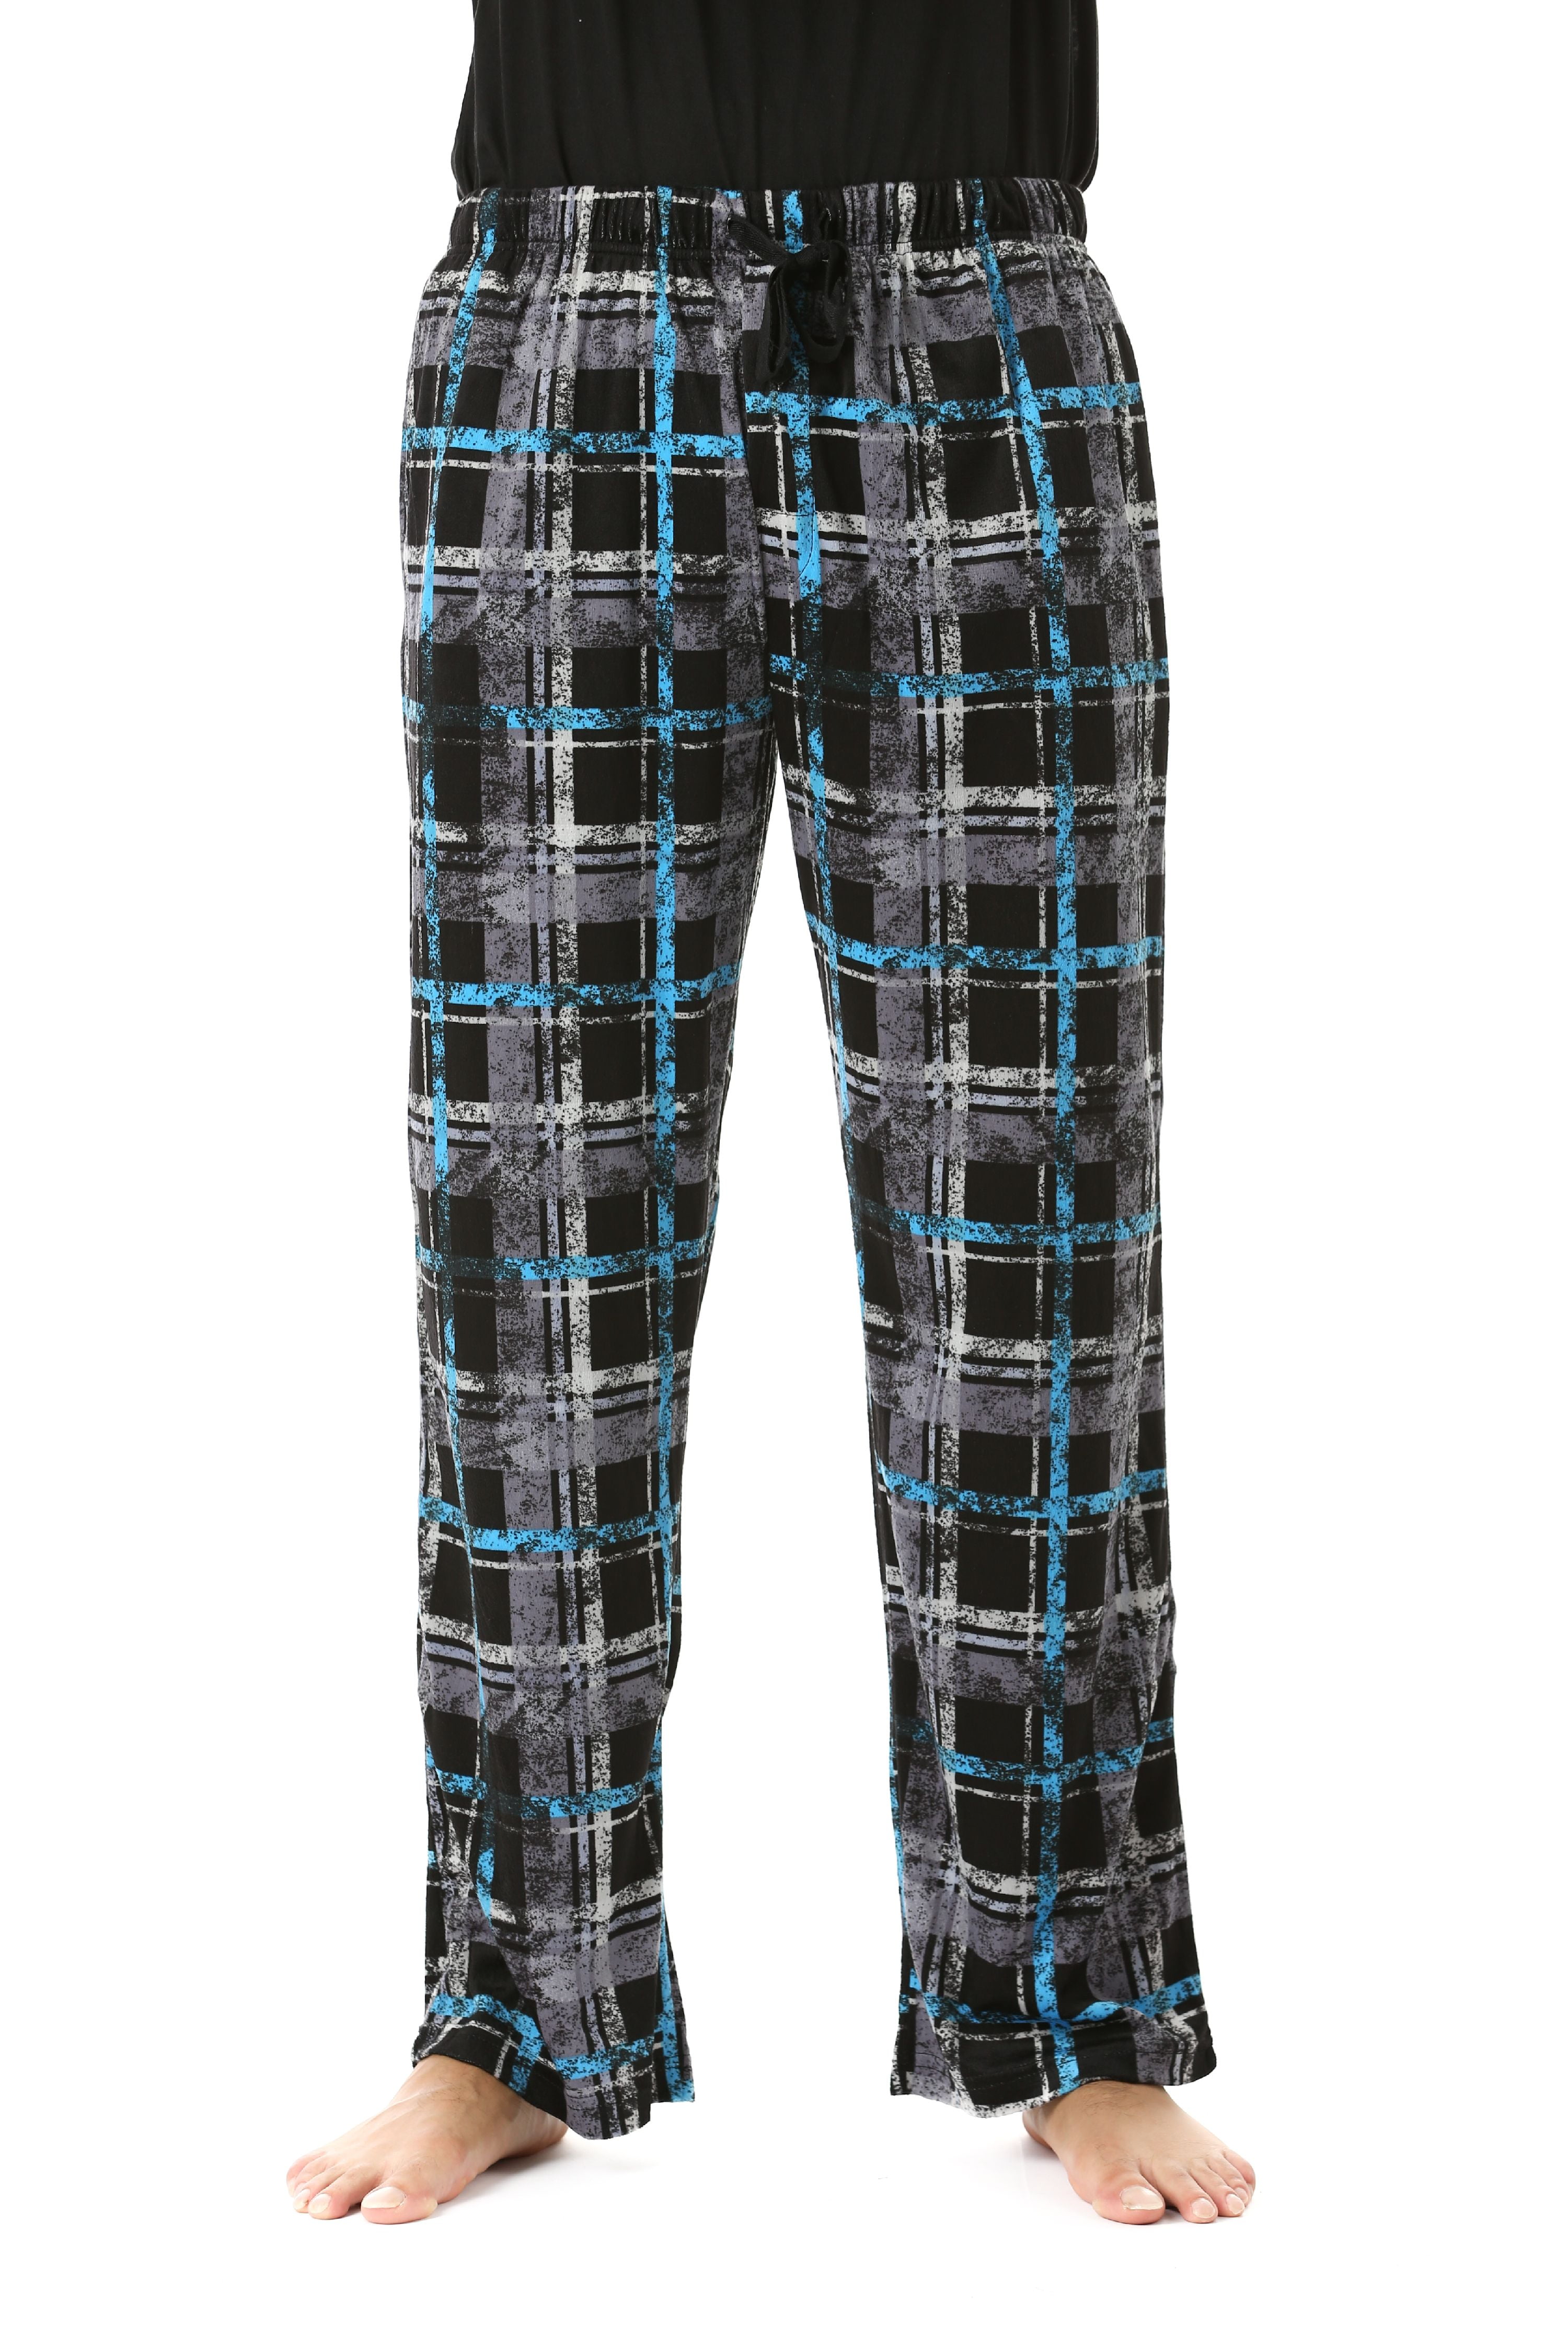 #FollowMe Fleece Pajama Pants for Men / Sleepwear / PJs (Small, Black ...